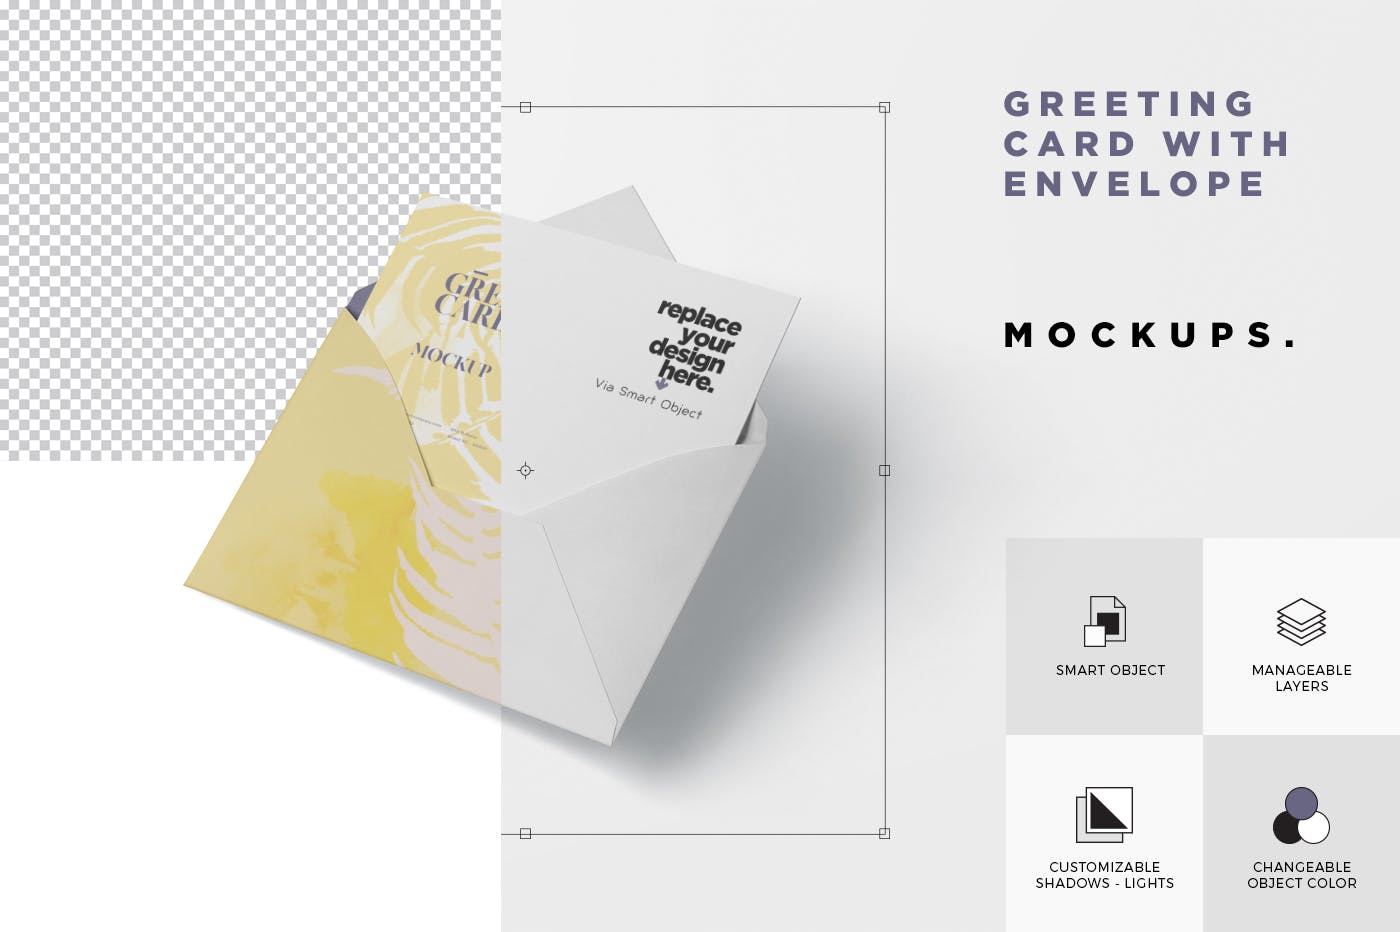 高端企业信封&贺卡设计图16图库精选 Greeting Card Mockup with Envelope – A6 Size插图(5)